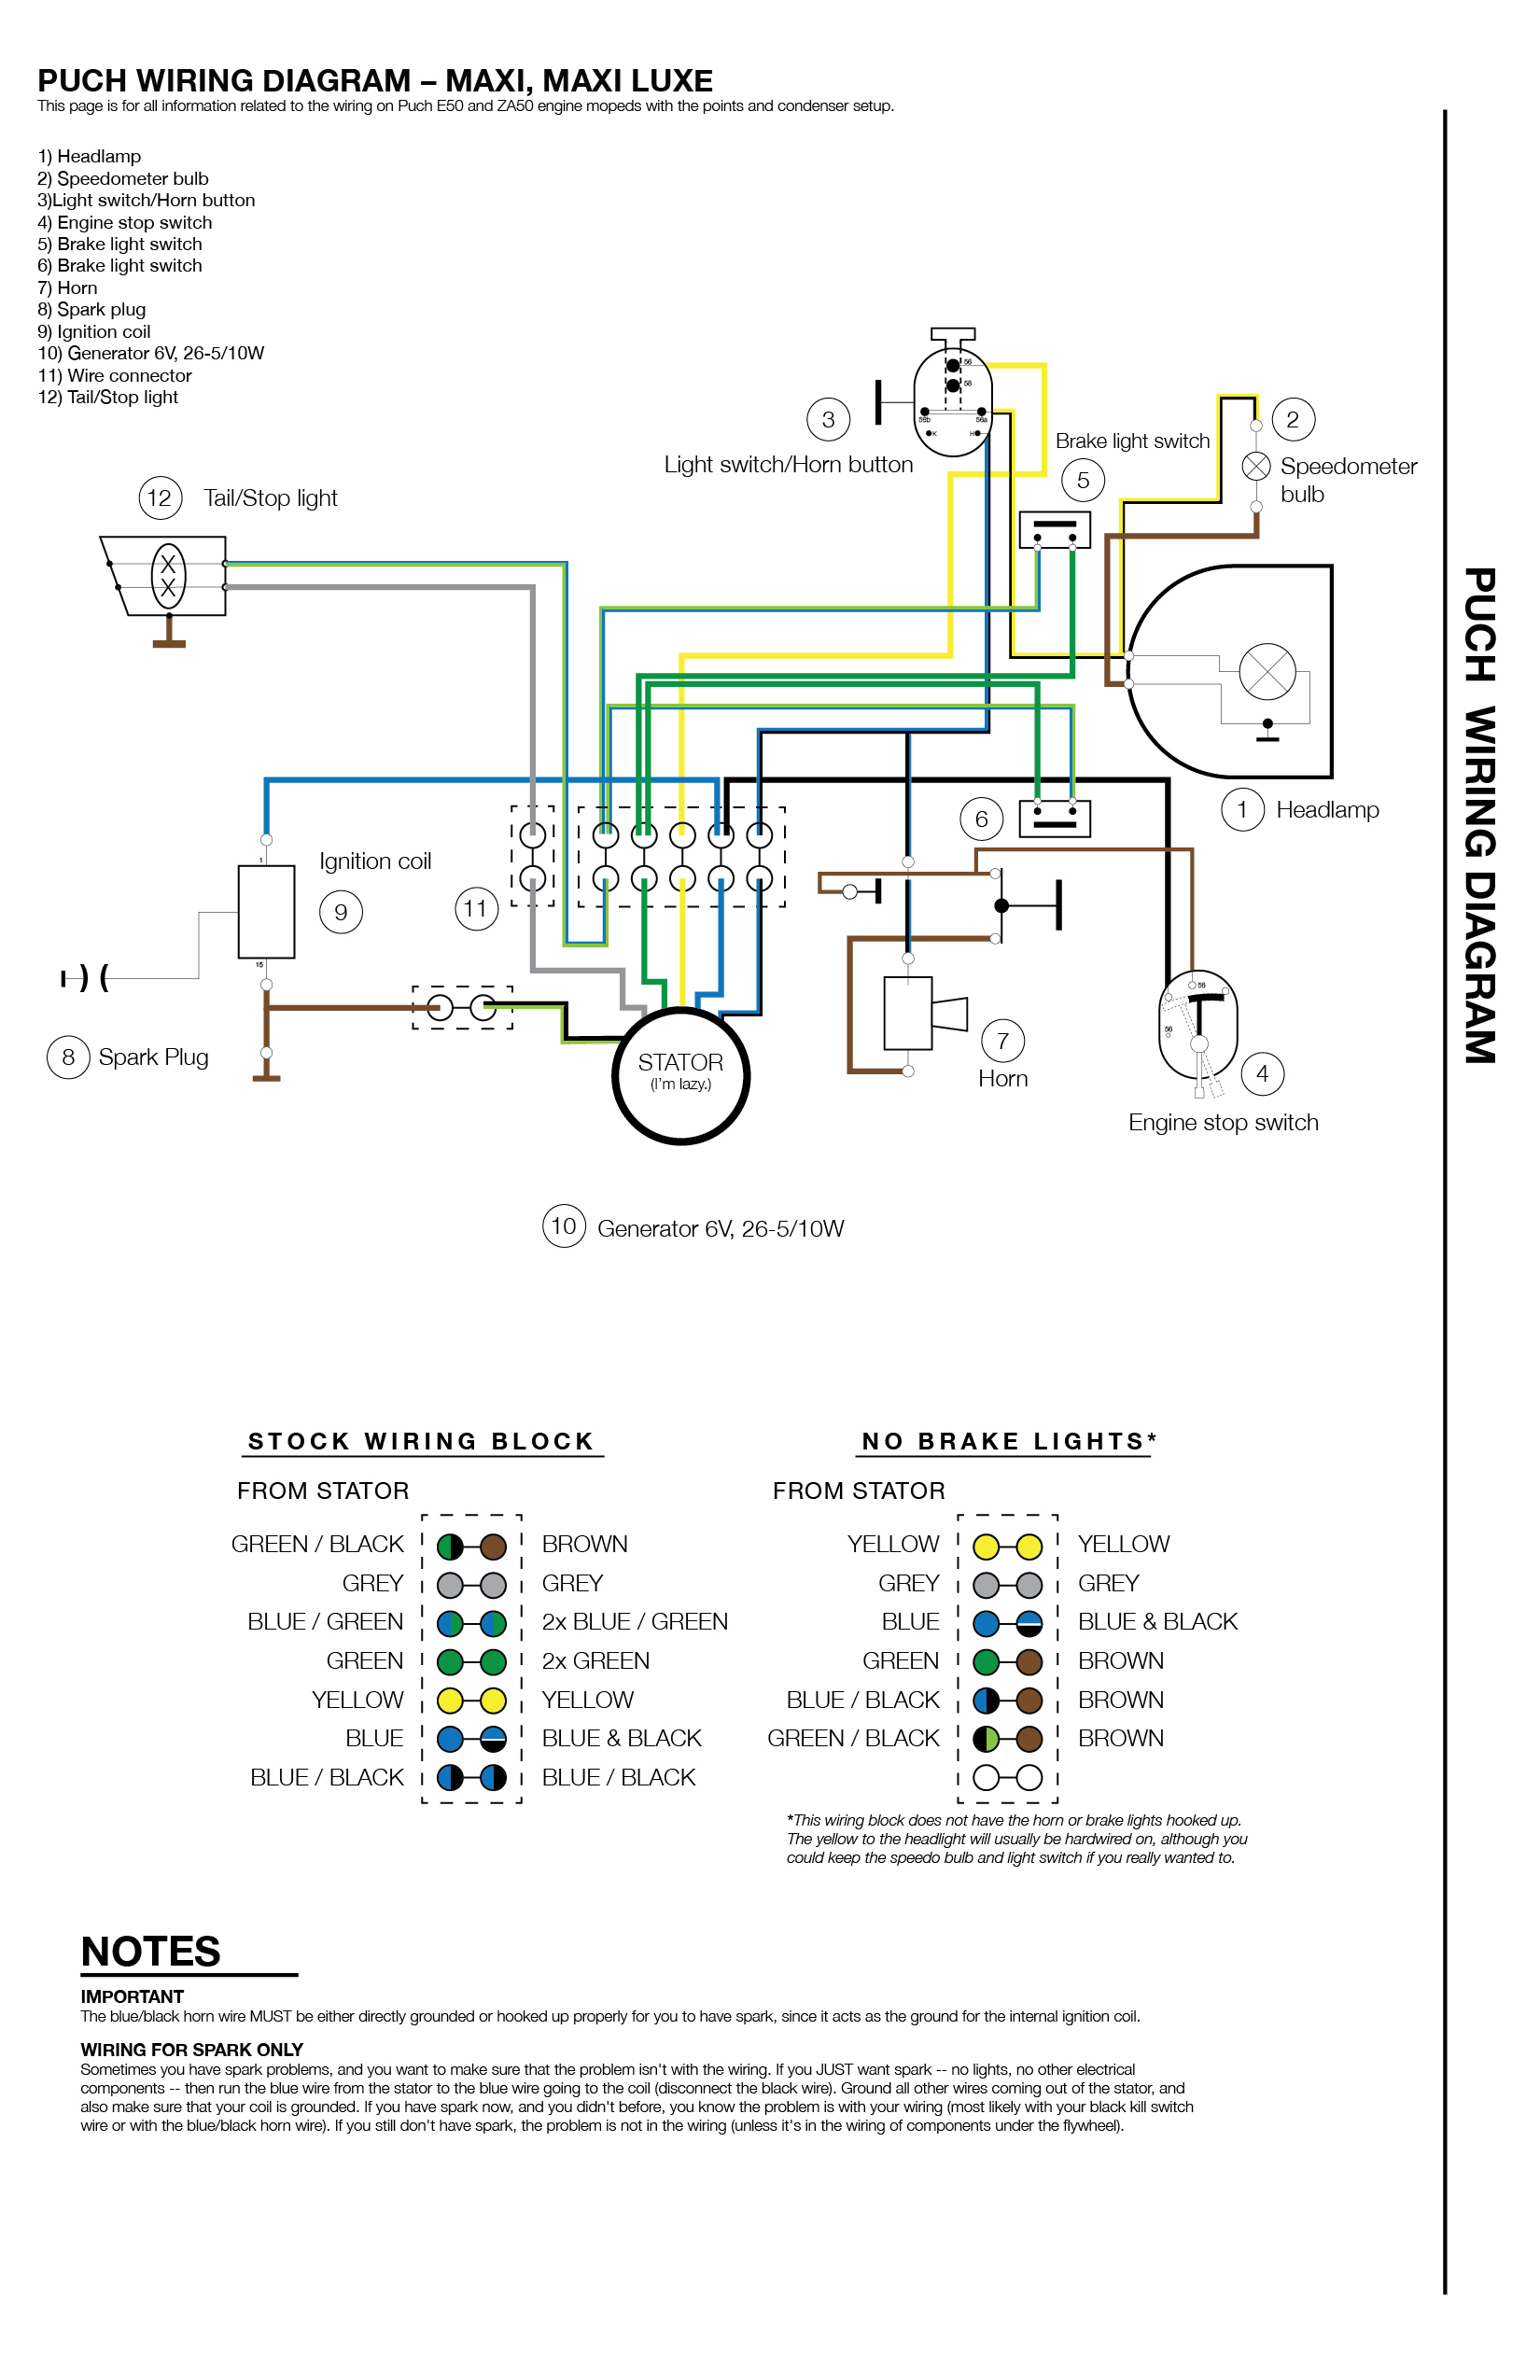 Puch Wiring - Moped Wiki - Brake Light Switch Wiring Diagram